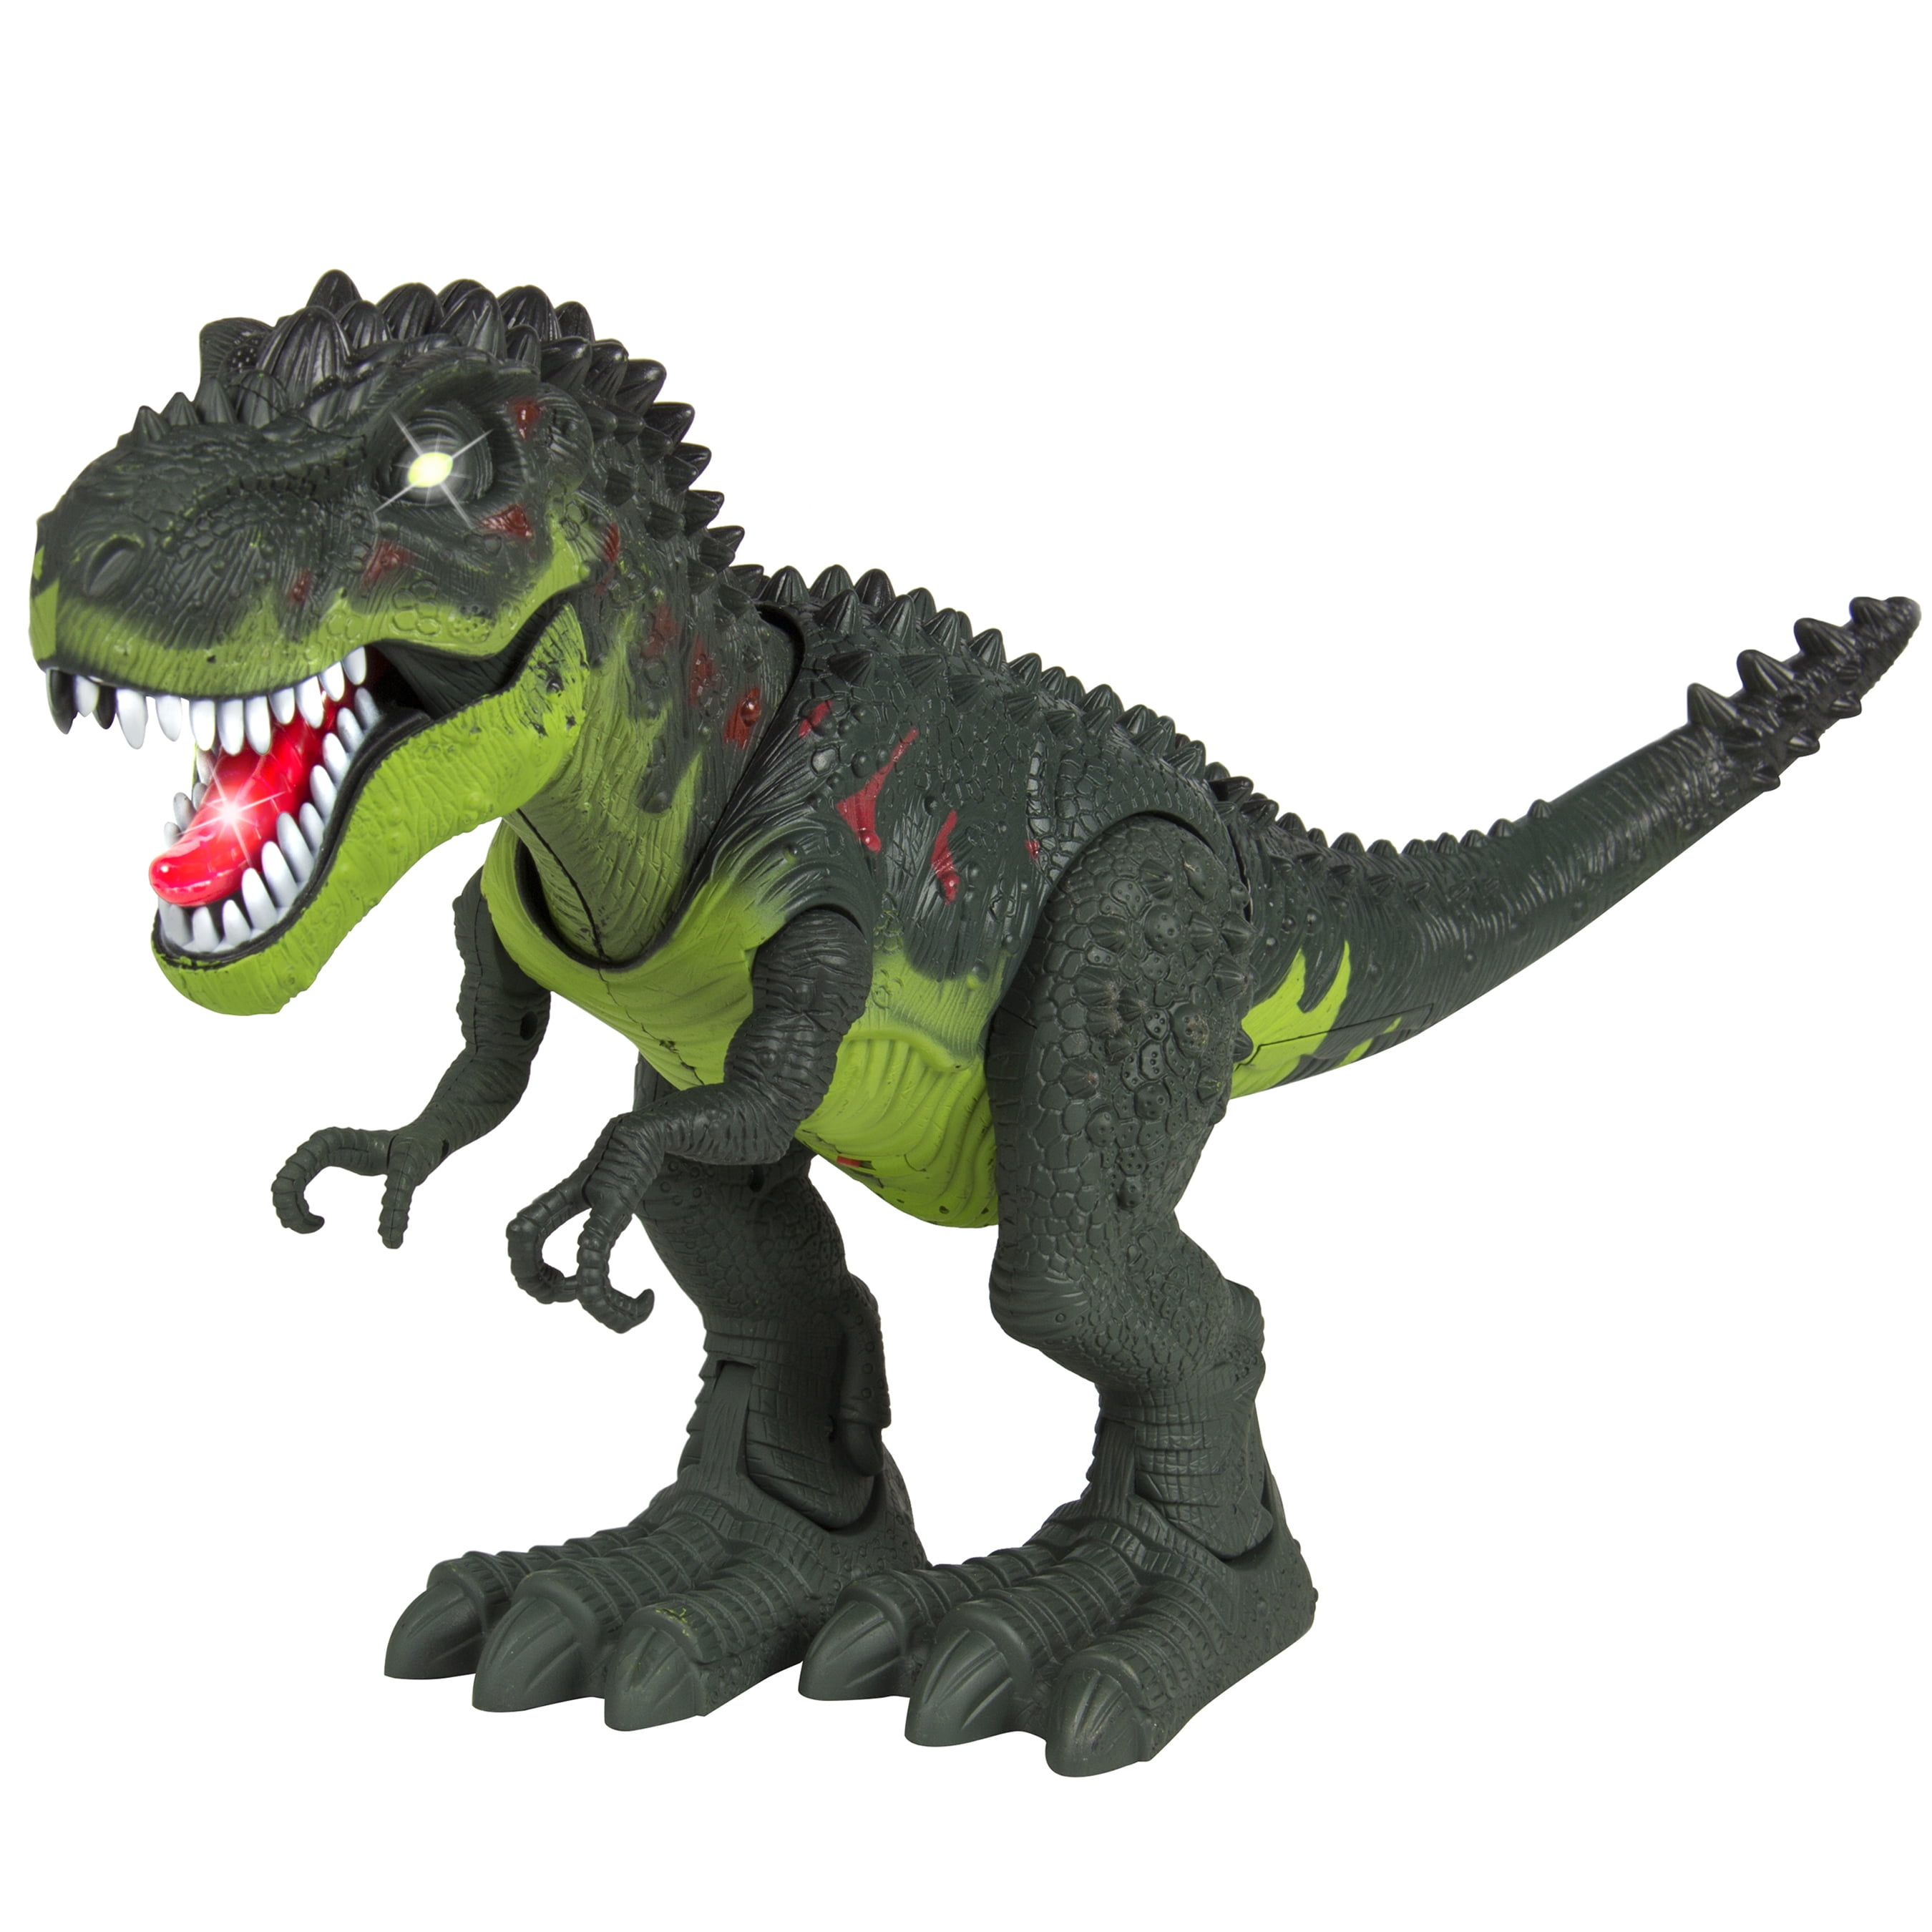 12" Large Tyrannosaurus Rex Dinosaur Toy Model Christmas Gift For Boy Kids T-Rex 